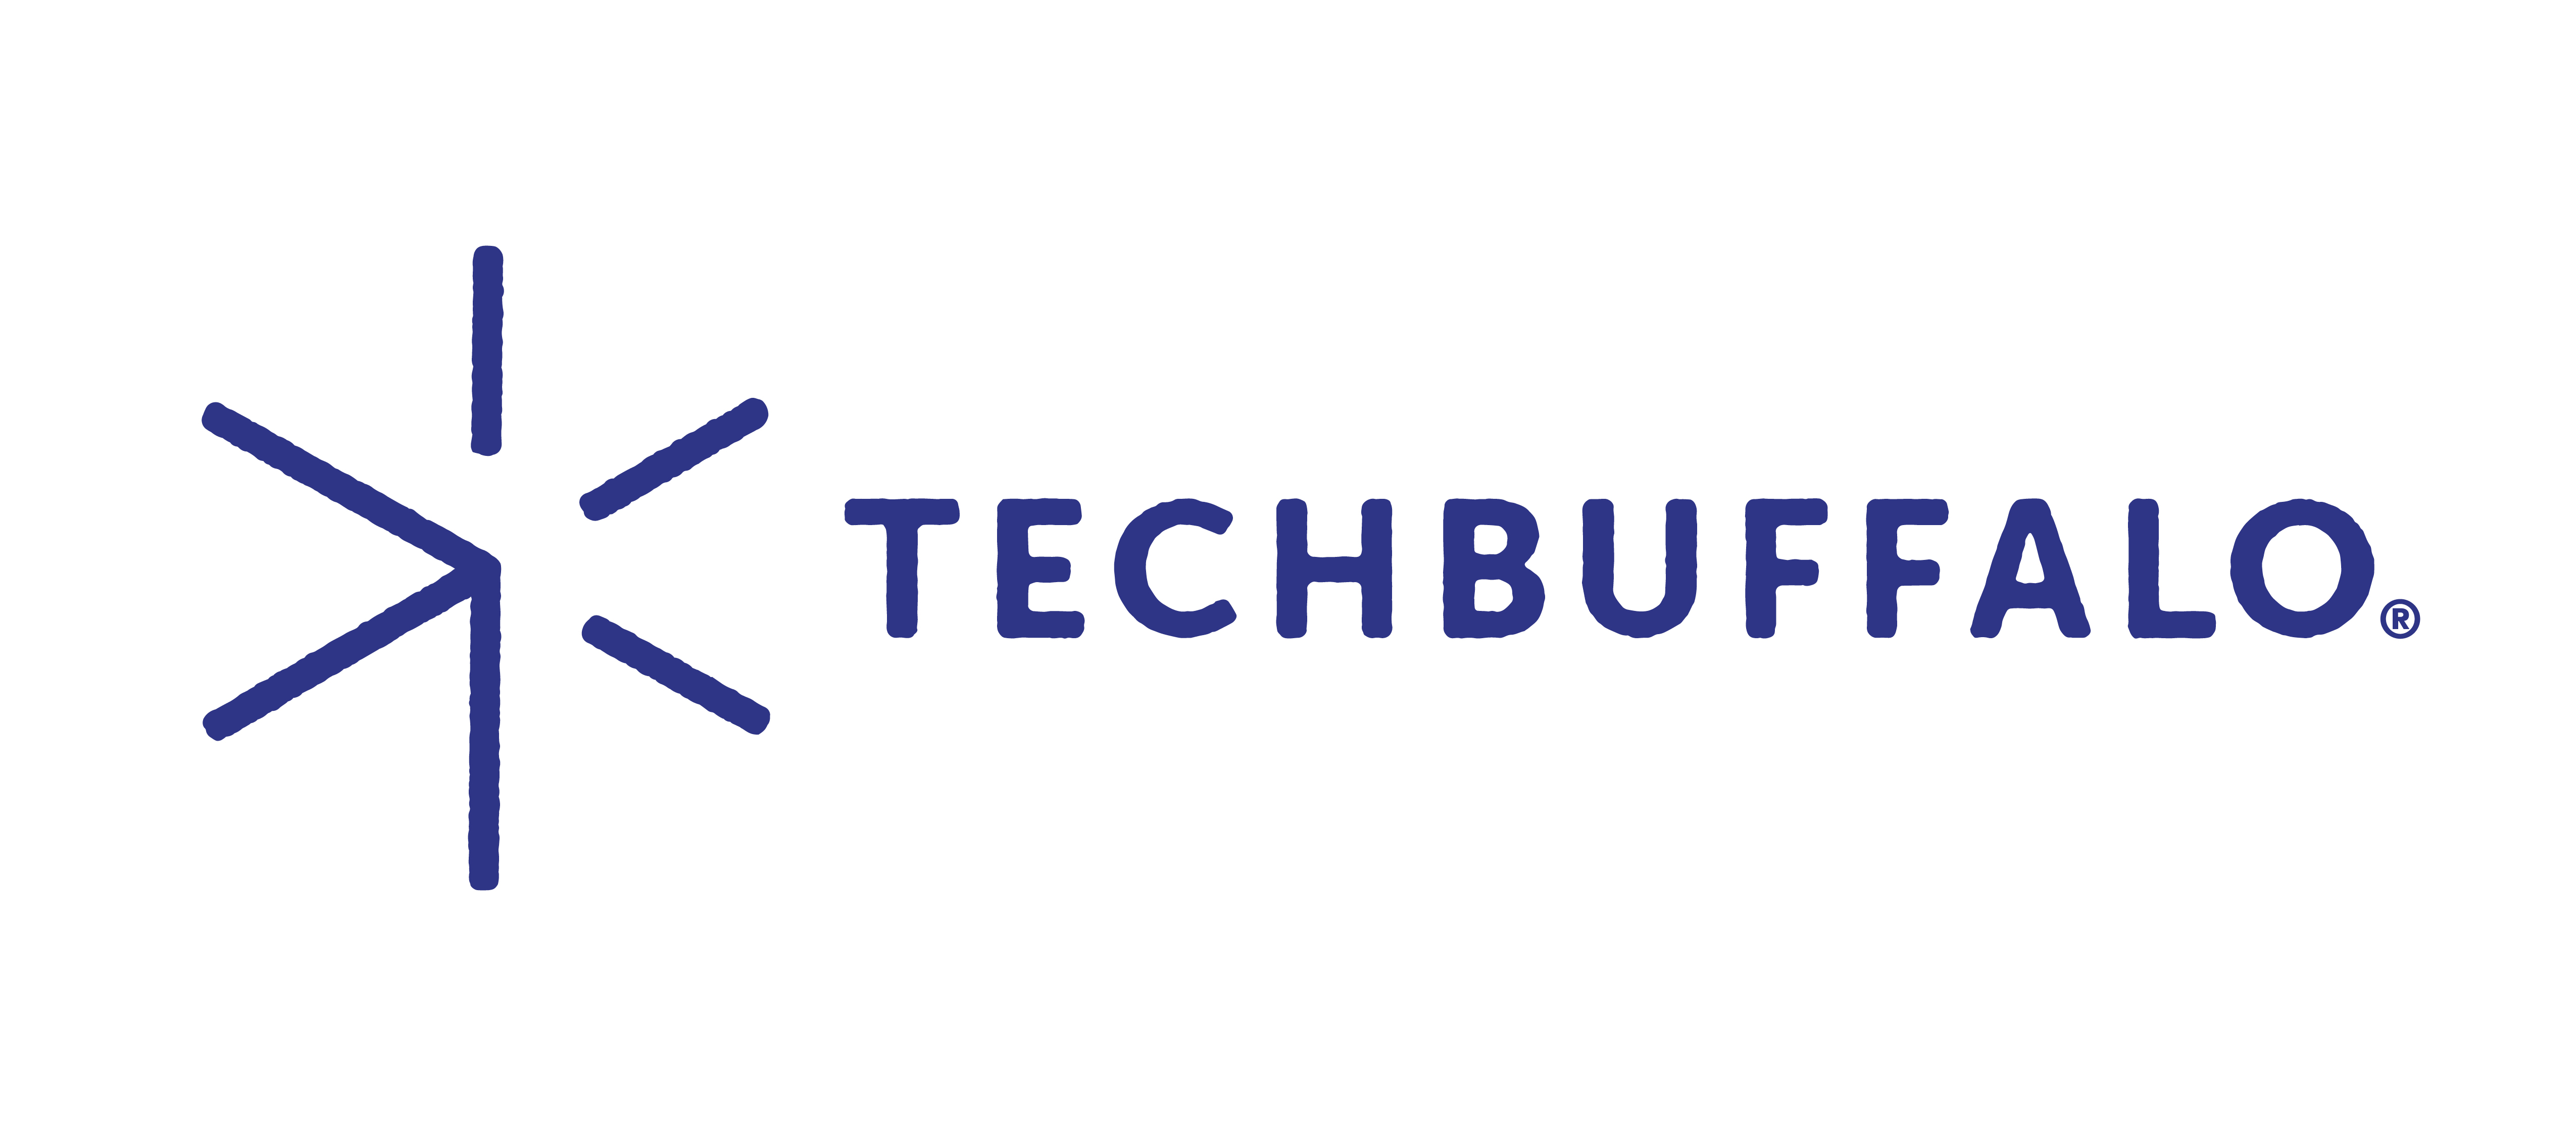 TechBuffalo